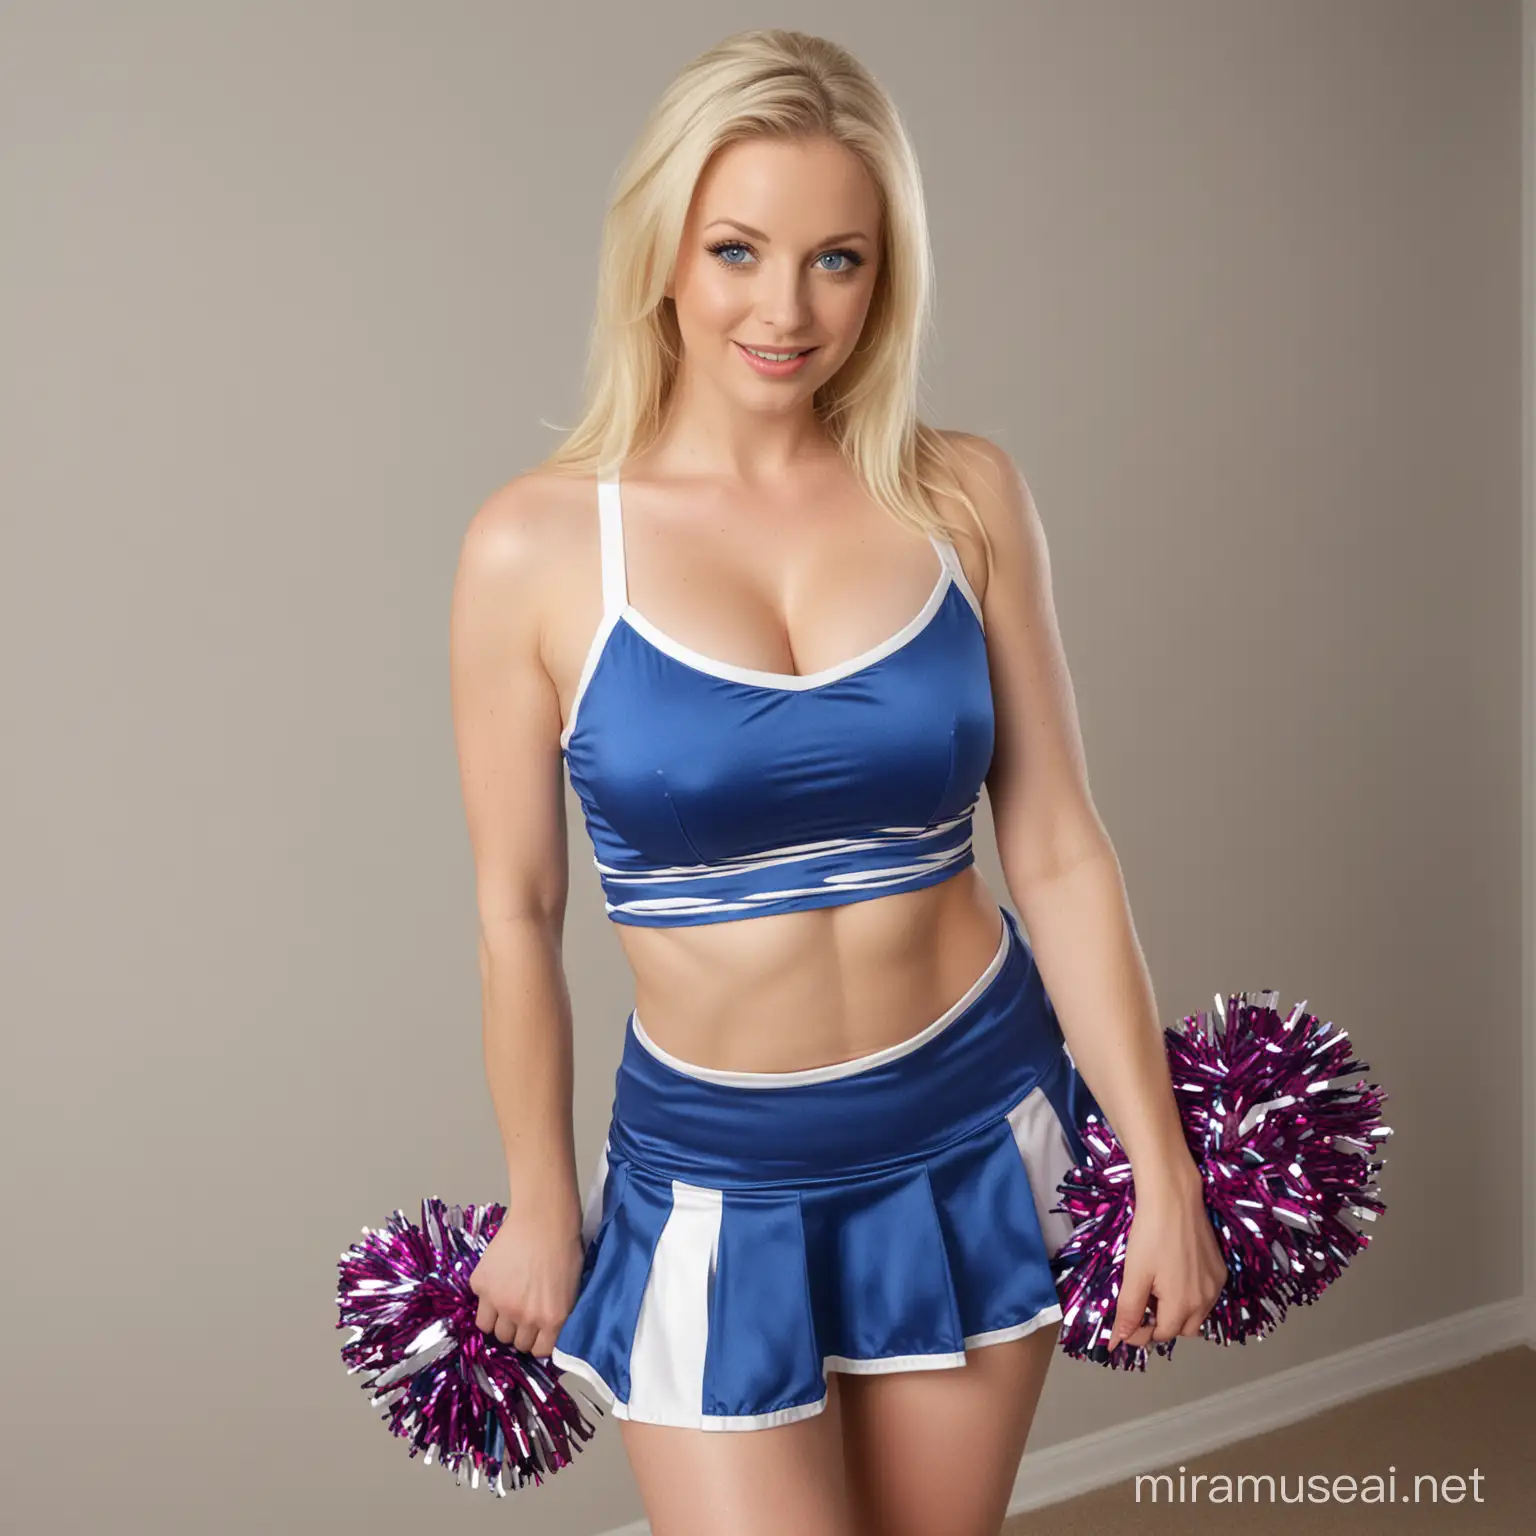 Blonde Cheerleader MILF with Big Breasts in Short Skirt Pose